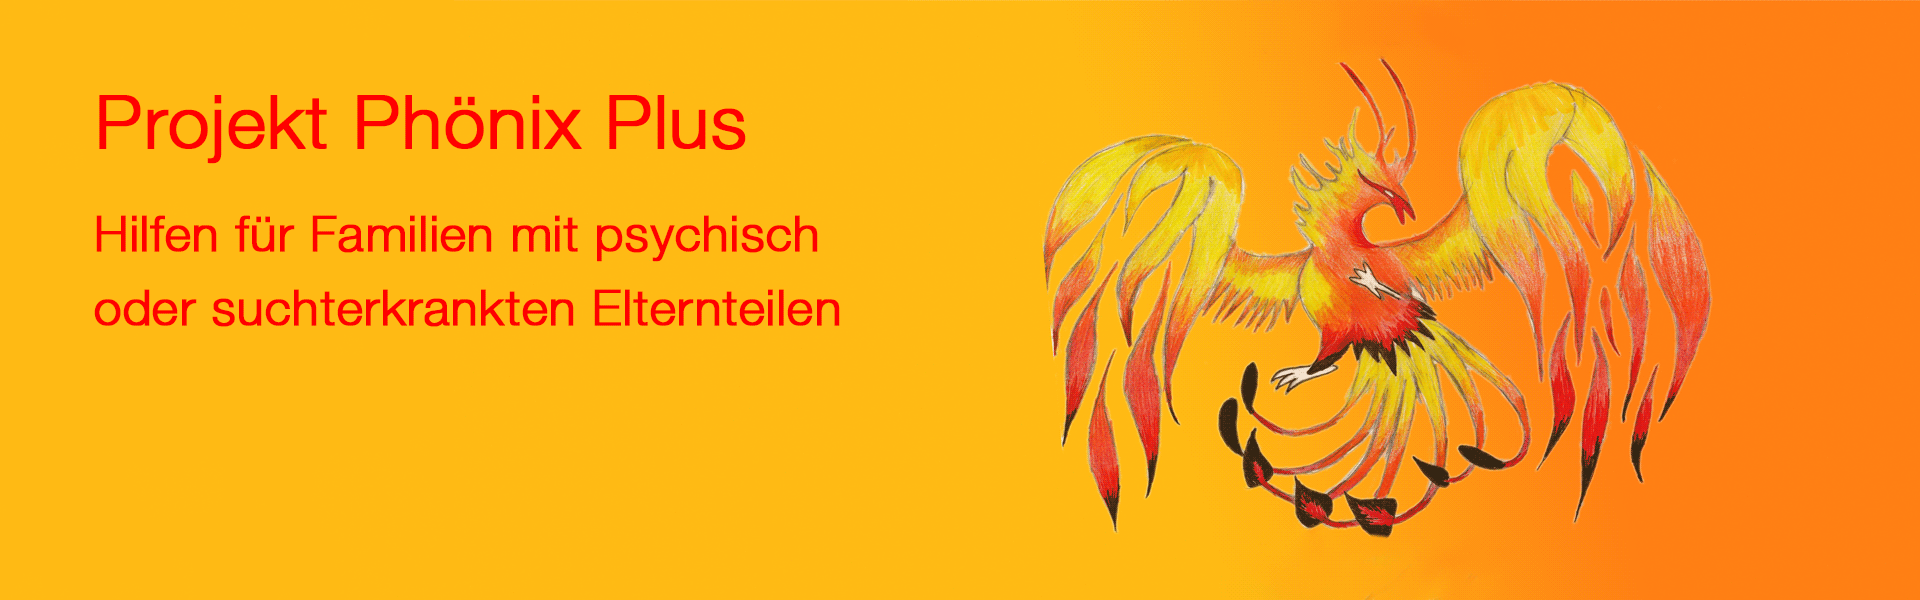 Flyer_Phoenix-Plus_2019-2 (c) Caritas Rhein-Erft